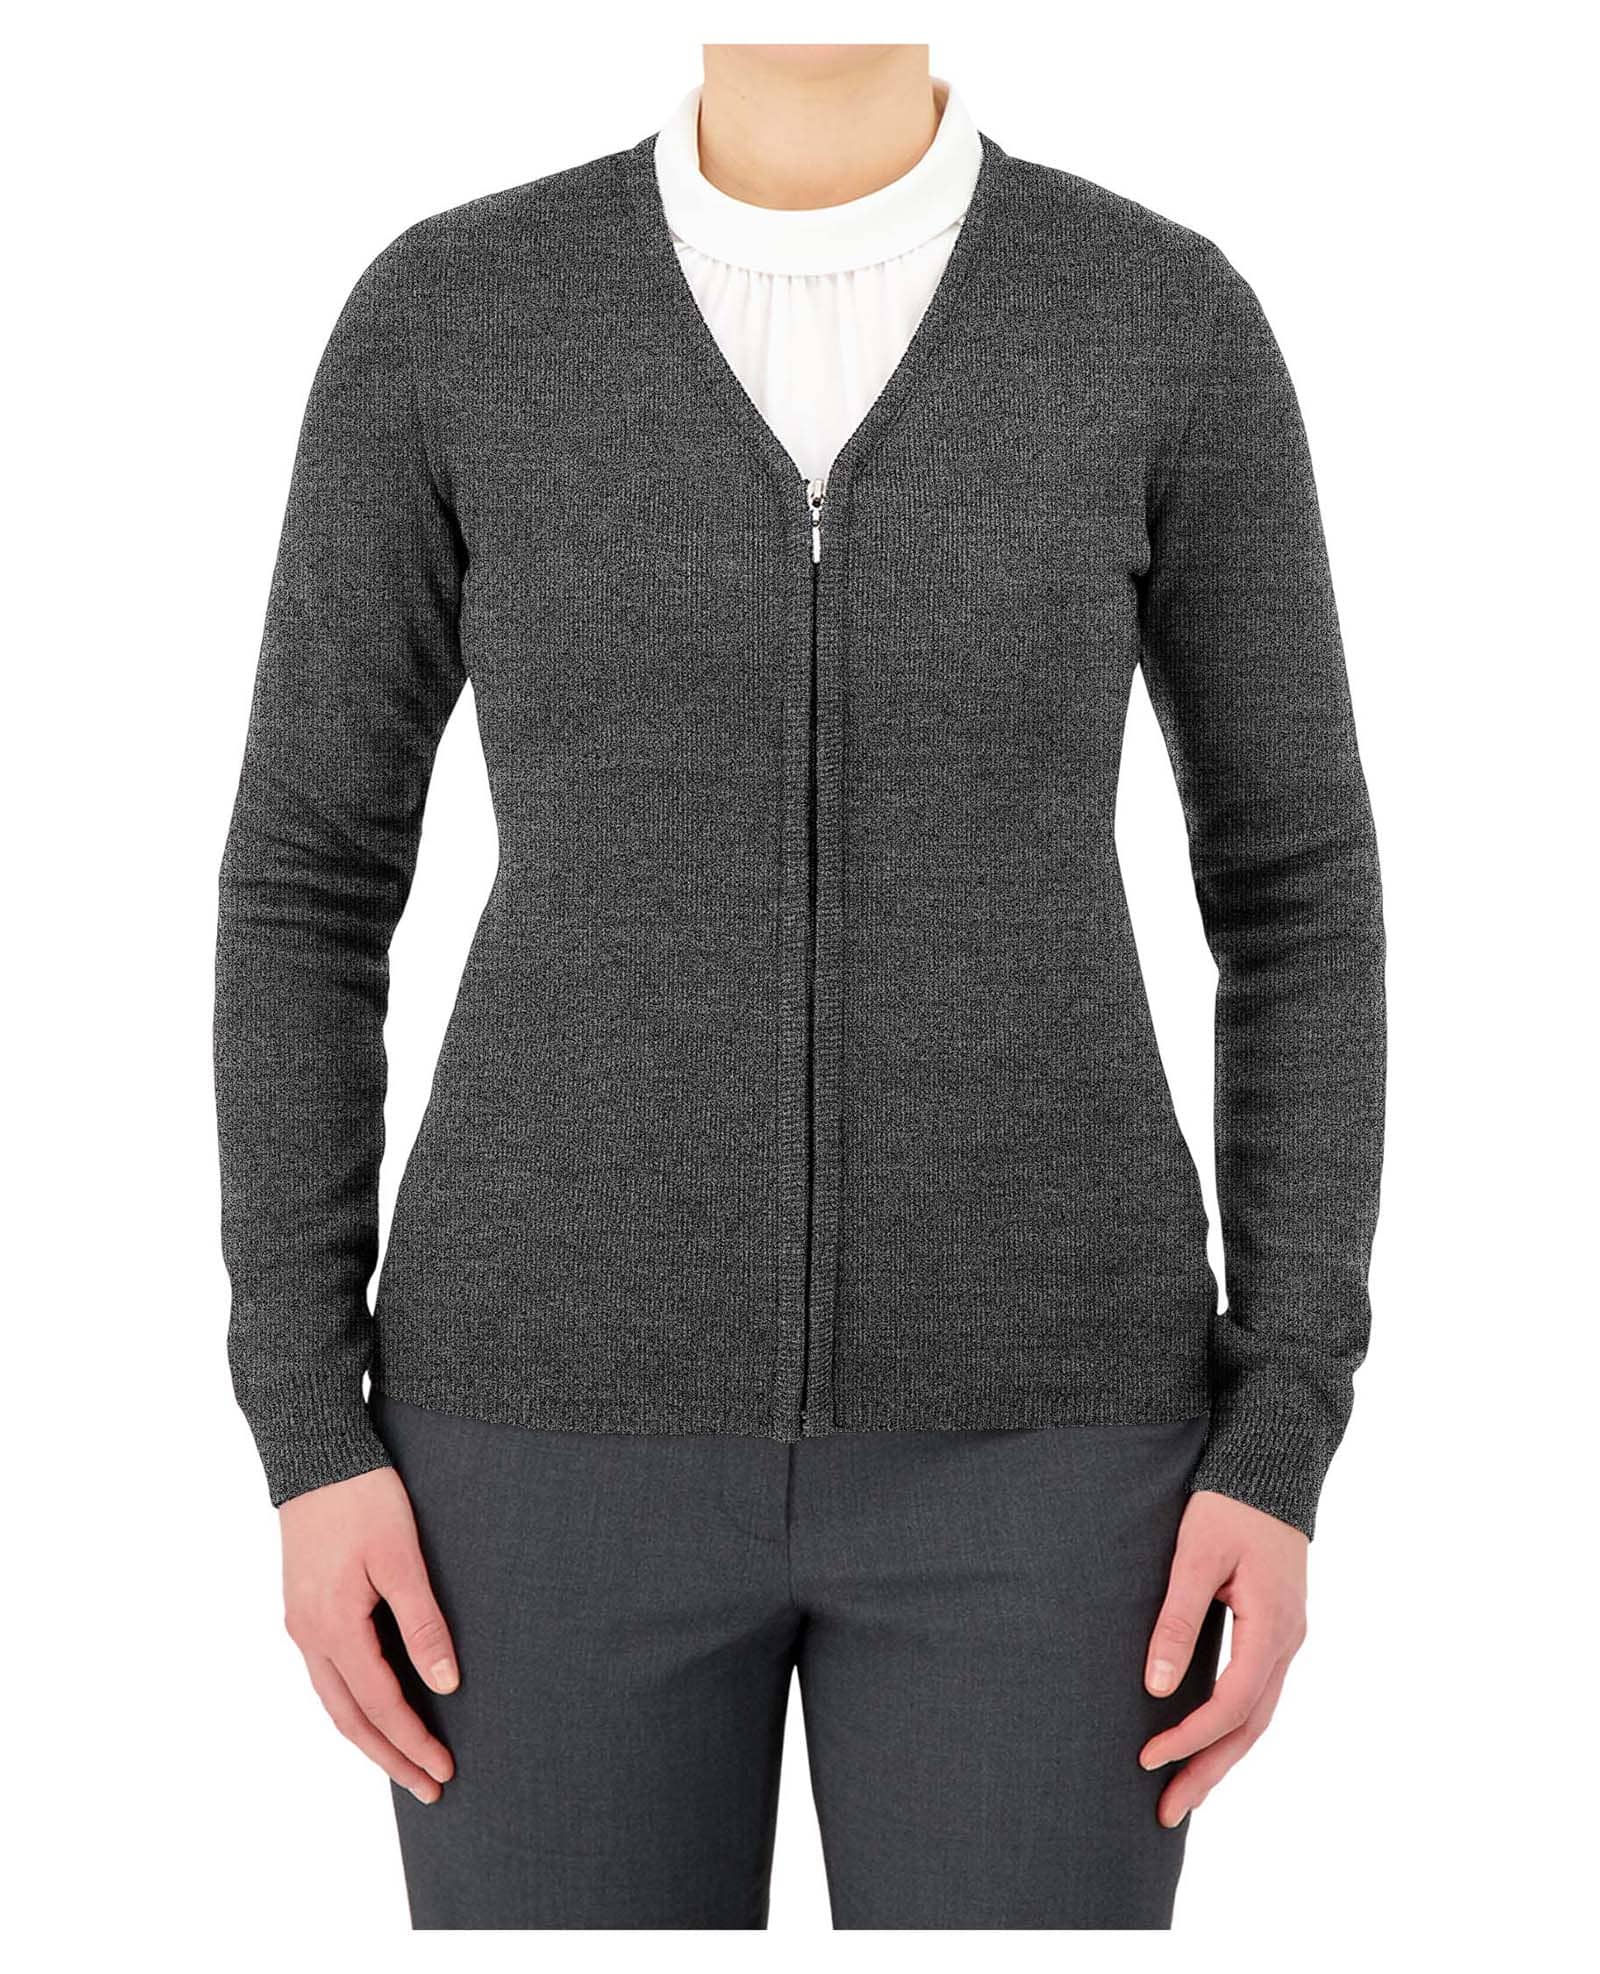 grey full zip uniform sweater